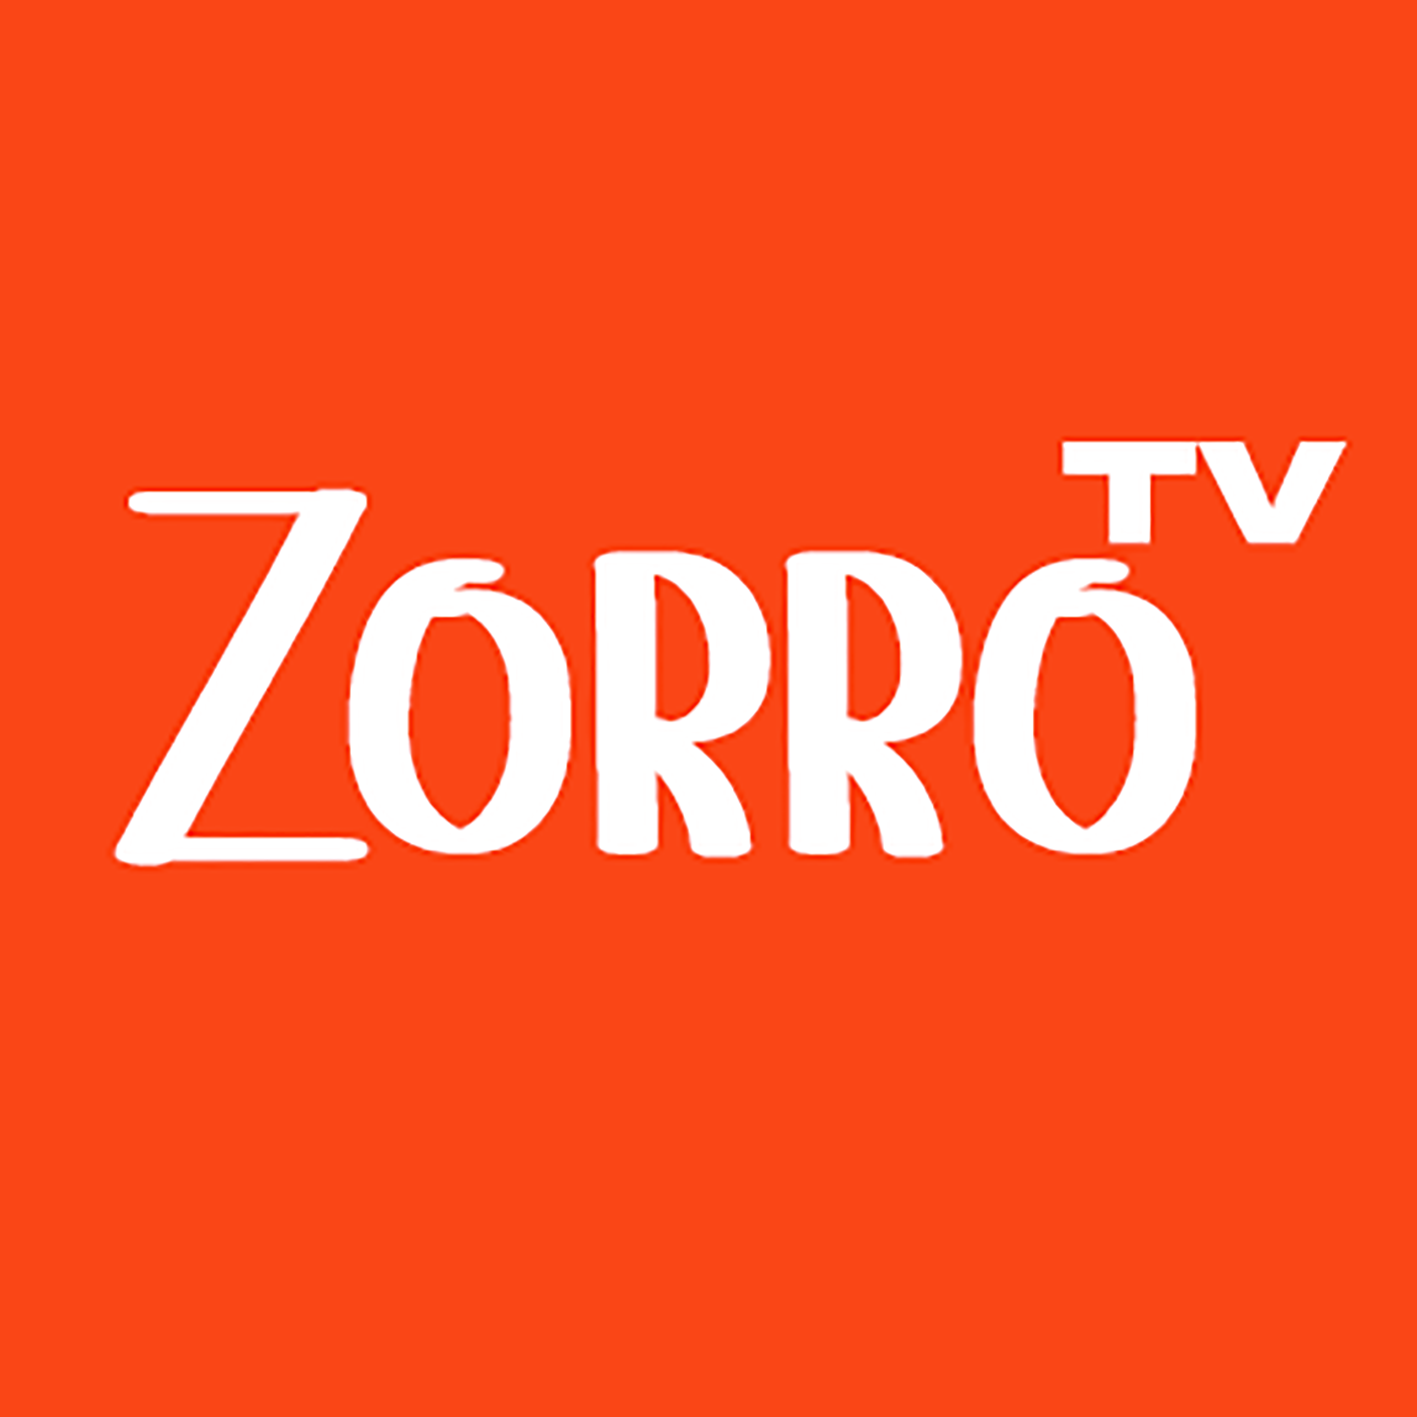 ZorroTV.net